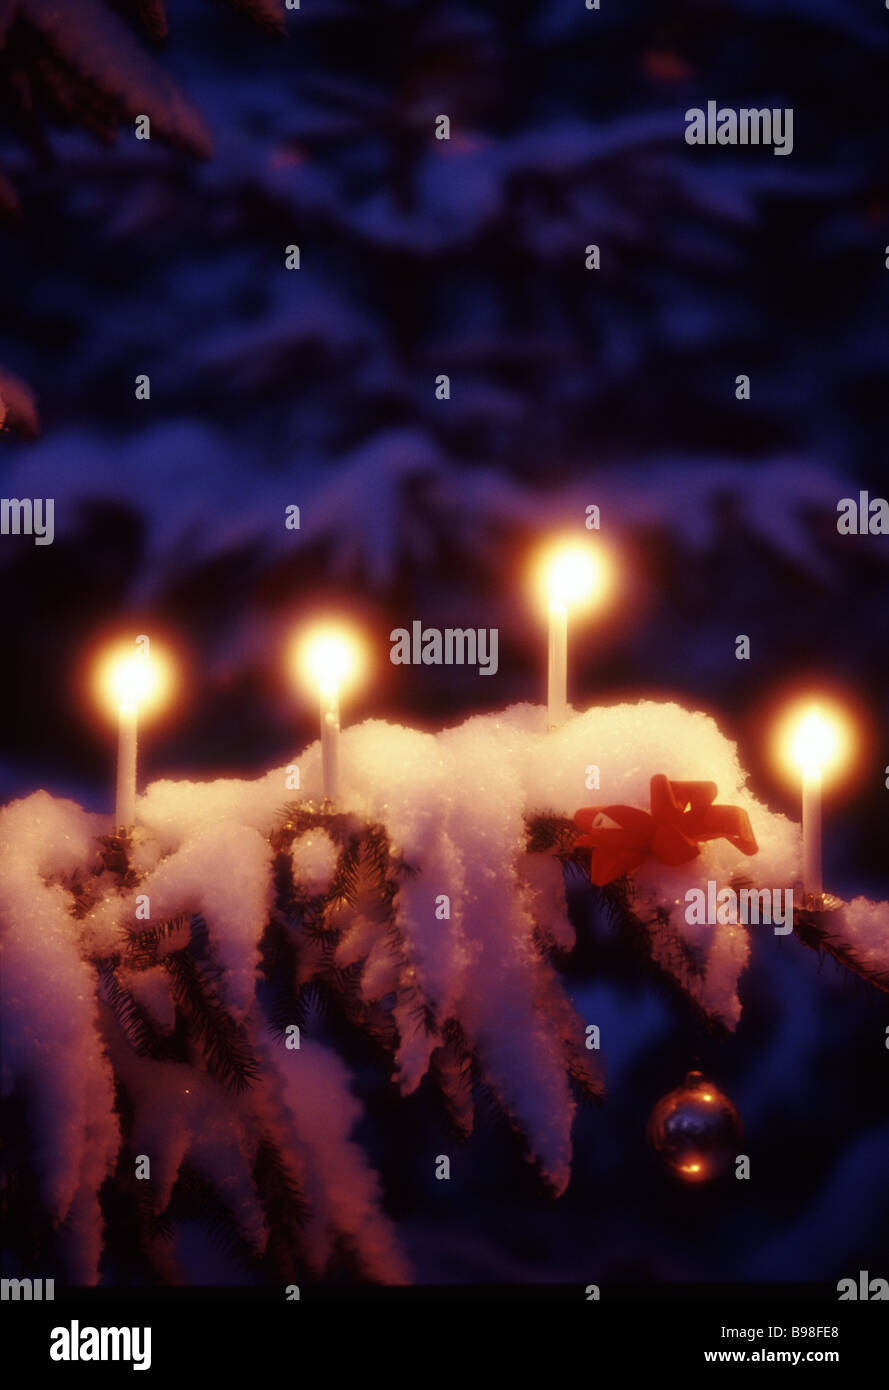 Candlelight on a Christmas tree. Stock Photo